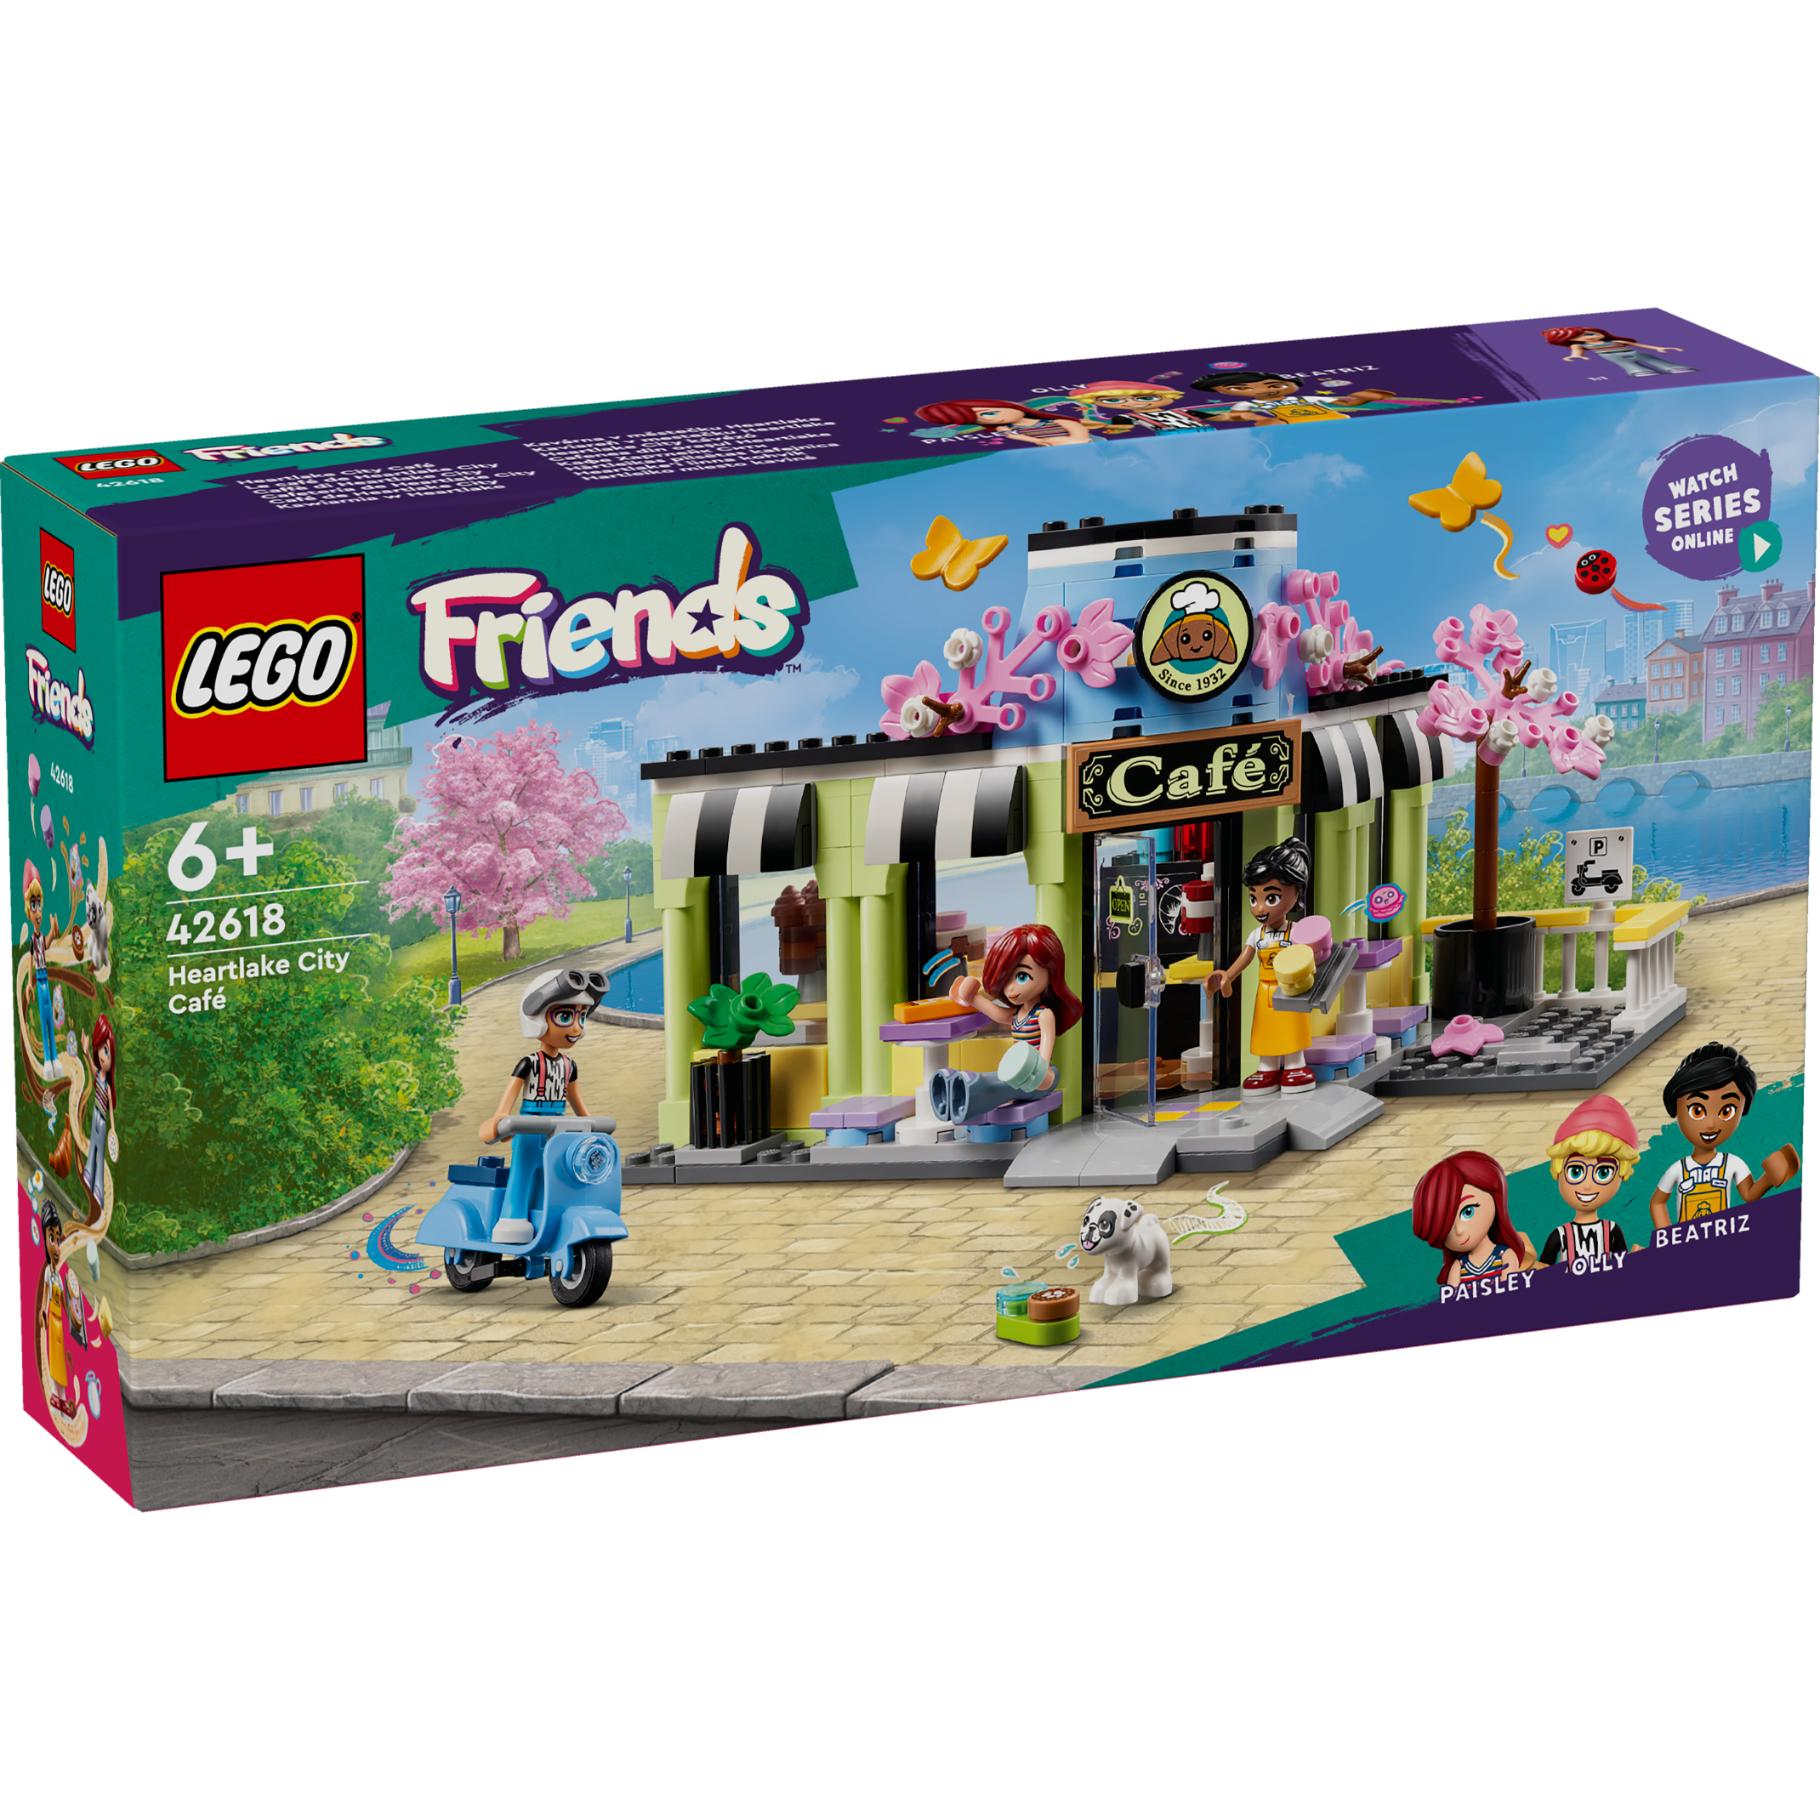 Lego 42618 Friends Heartlake City Café, Konstruktionsspielzeug